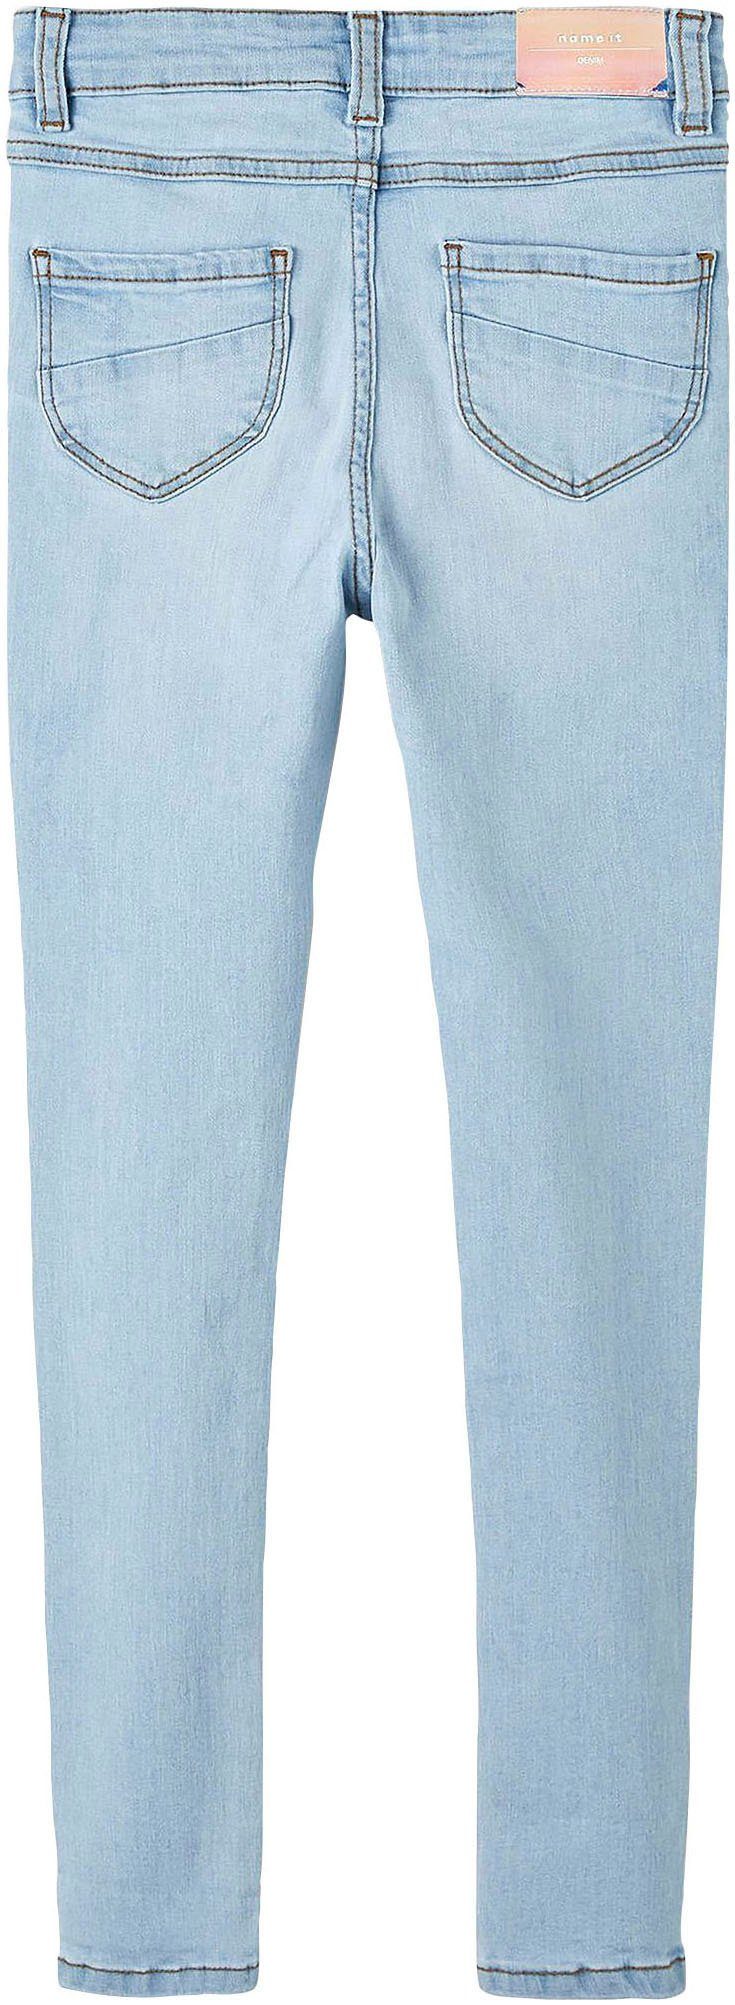 JEANS 1180-ST Denim Blue NKFPOLLY Name Light HW Skinny-fit-Jeans mit NOOS Stretch SKINNY It